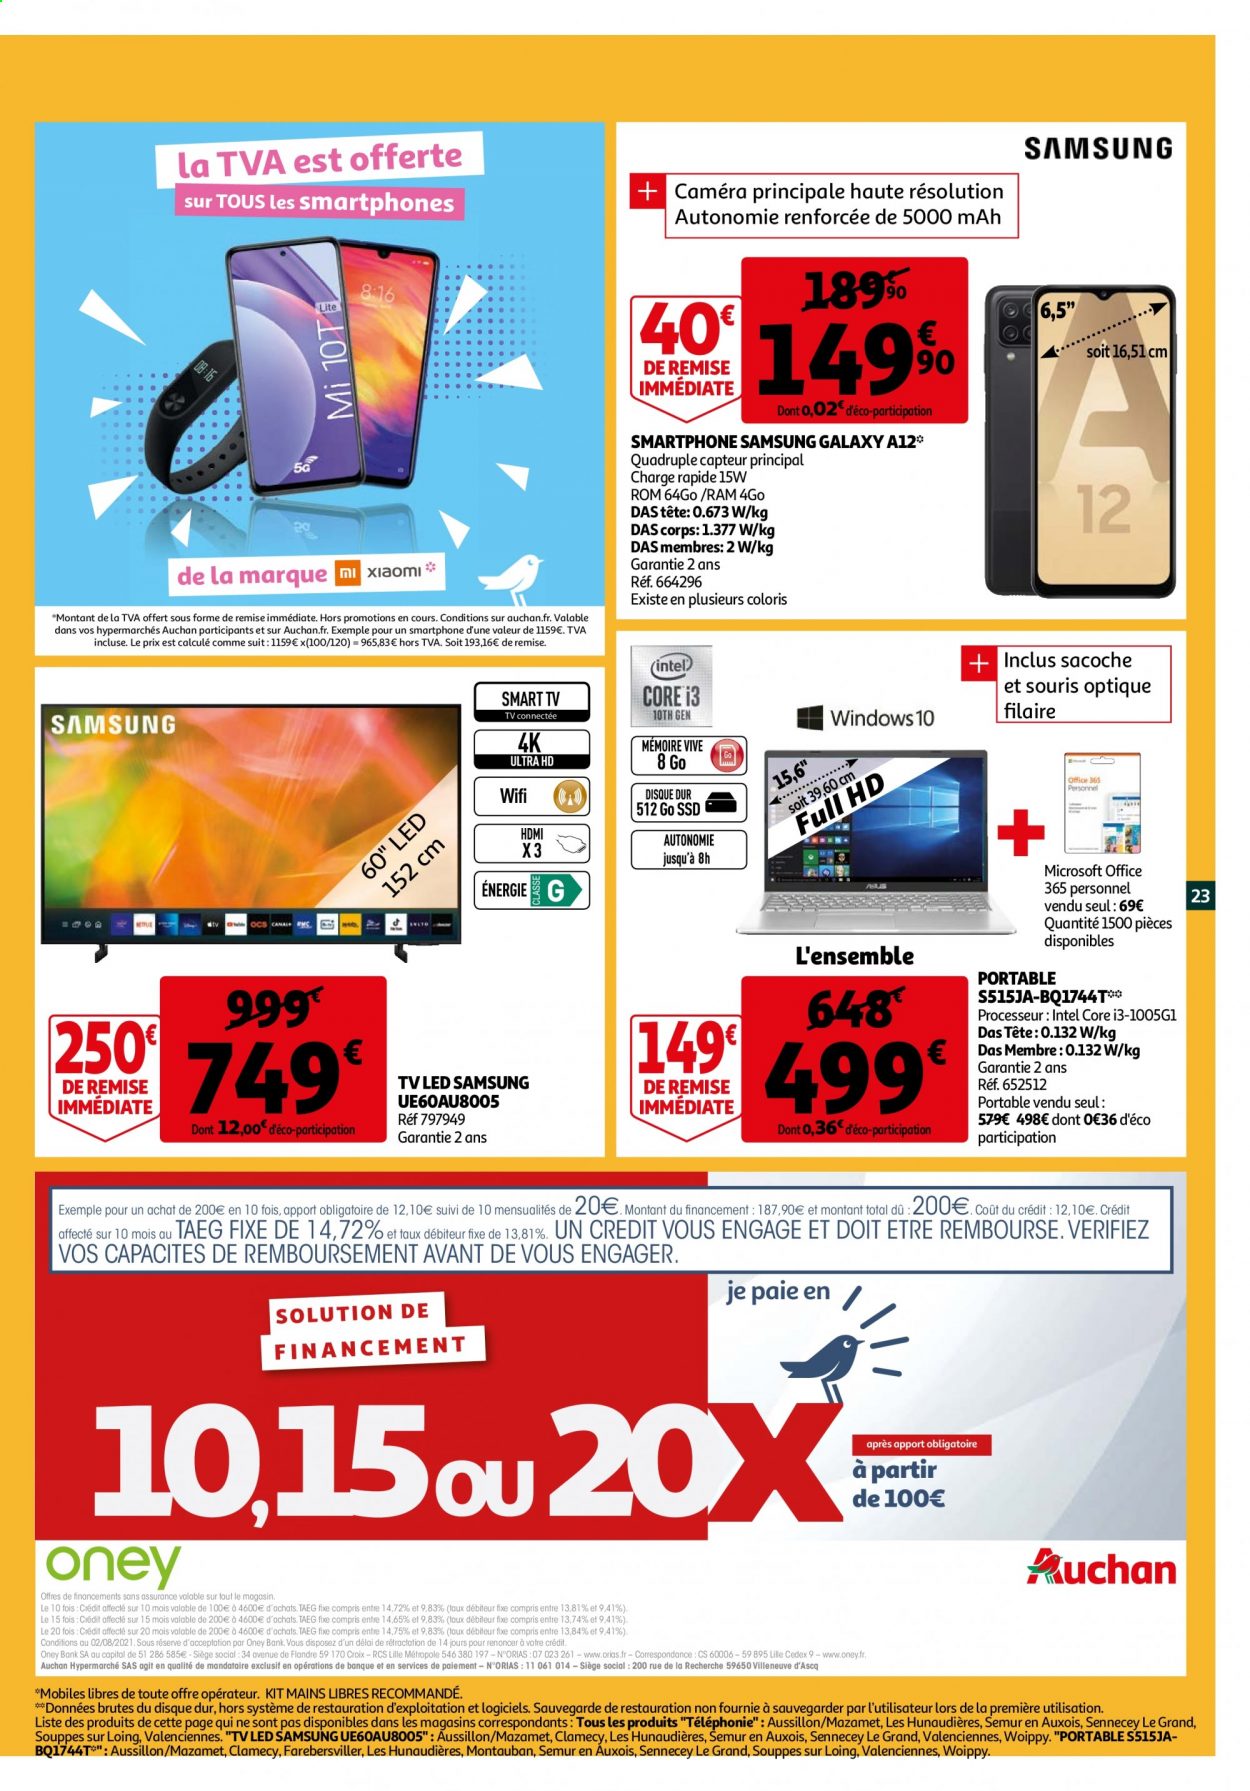 Catalogue Auchan - 08.09.2021 - 14.09.2021. 